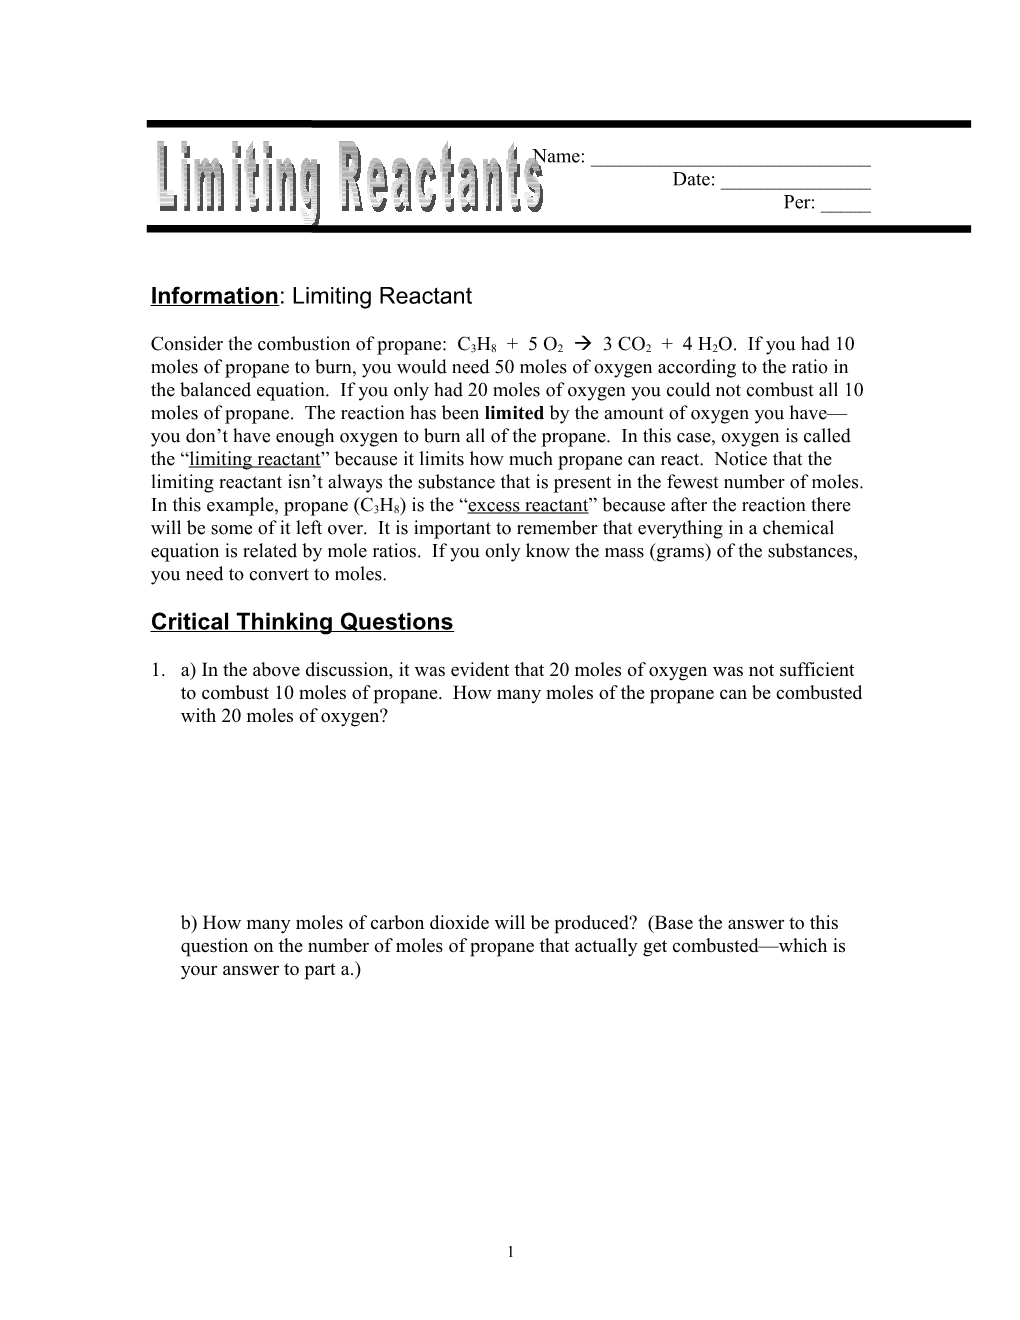 Information: Limiting Reactant